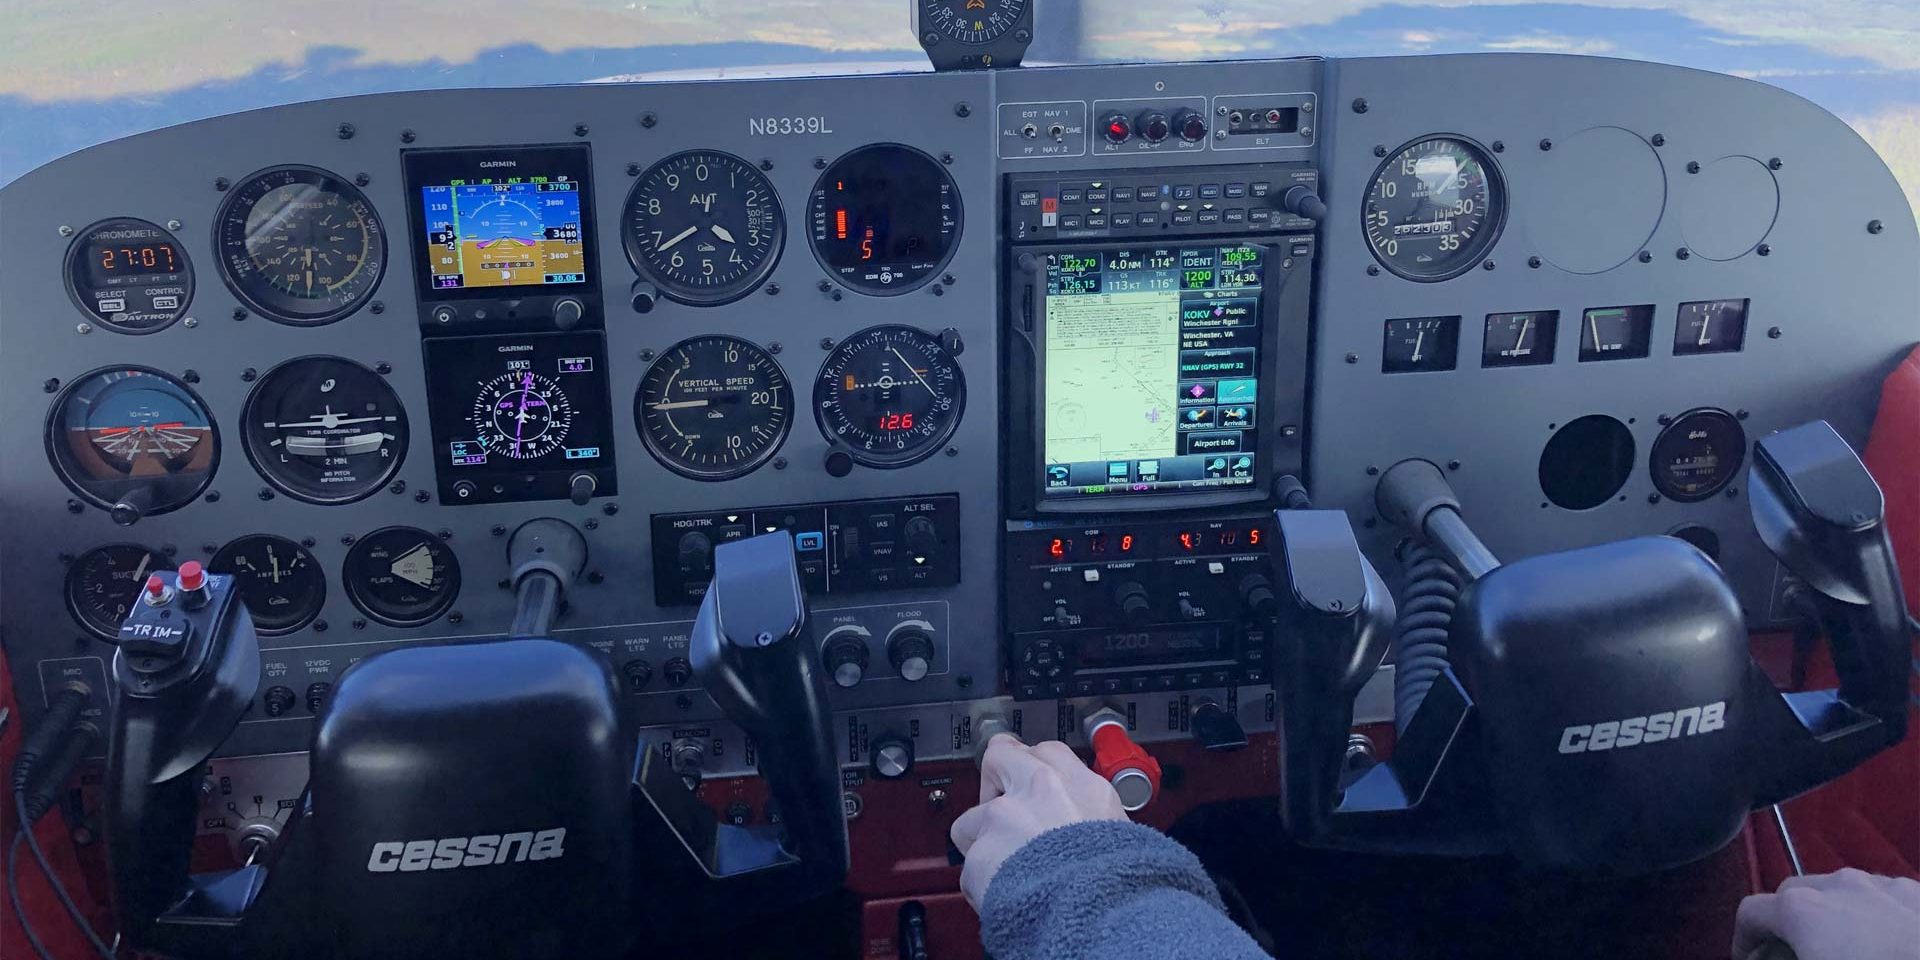 Cessna instrument panel upgrade with Garmin avionics.